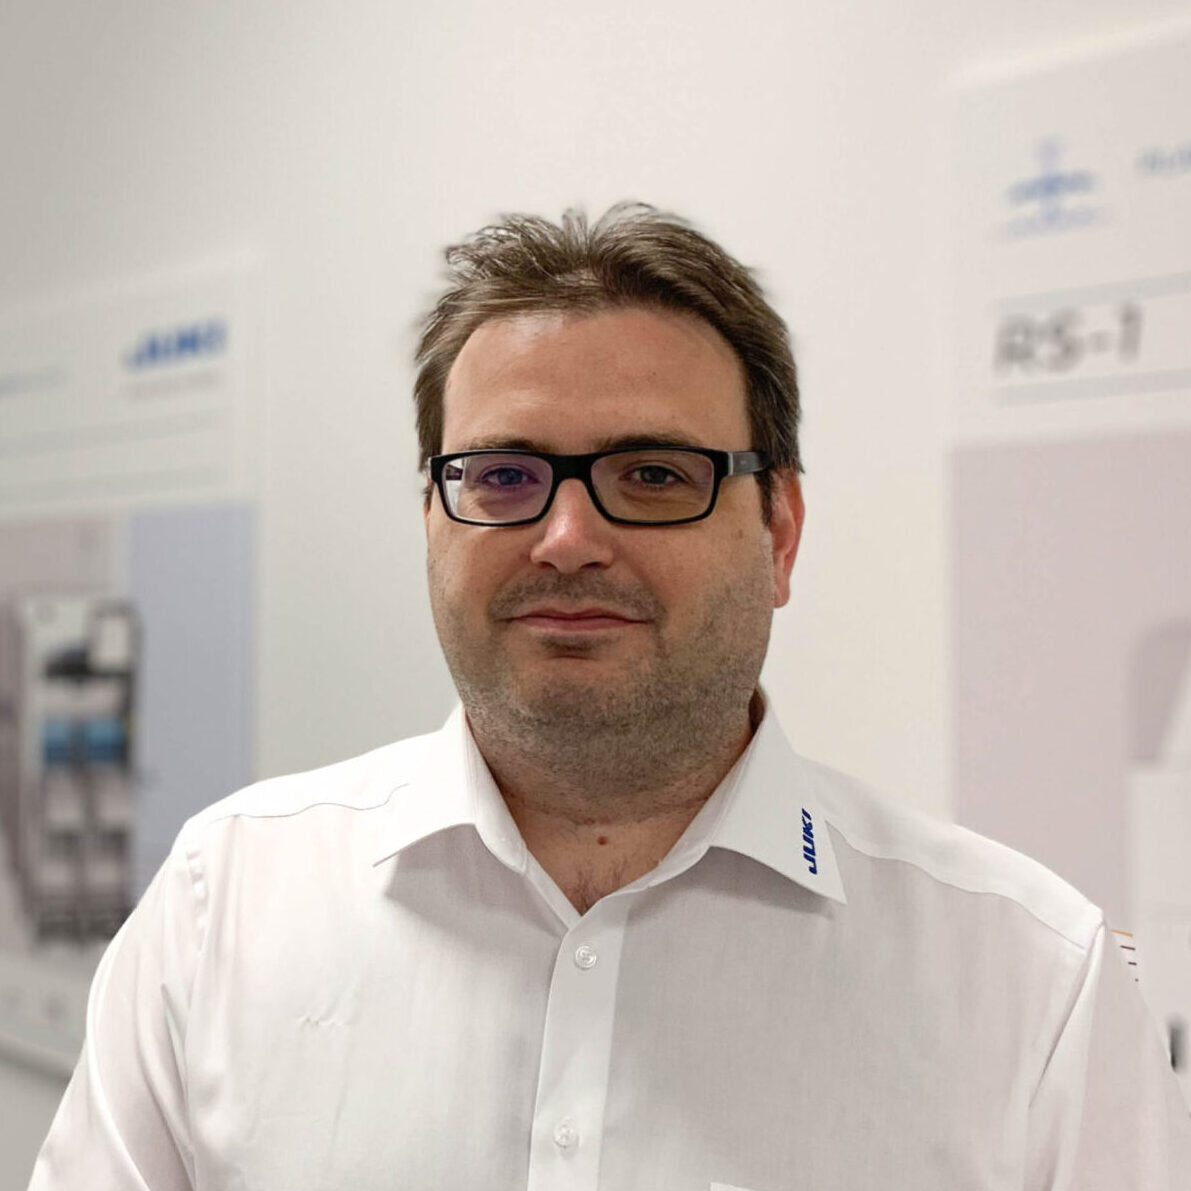 Stefan Grossmann, Team Leader Technical Competence Center, JUKI Automation Systems GmbH